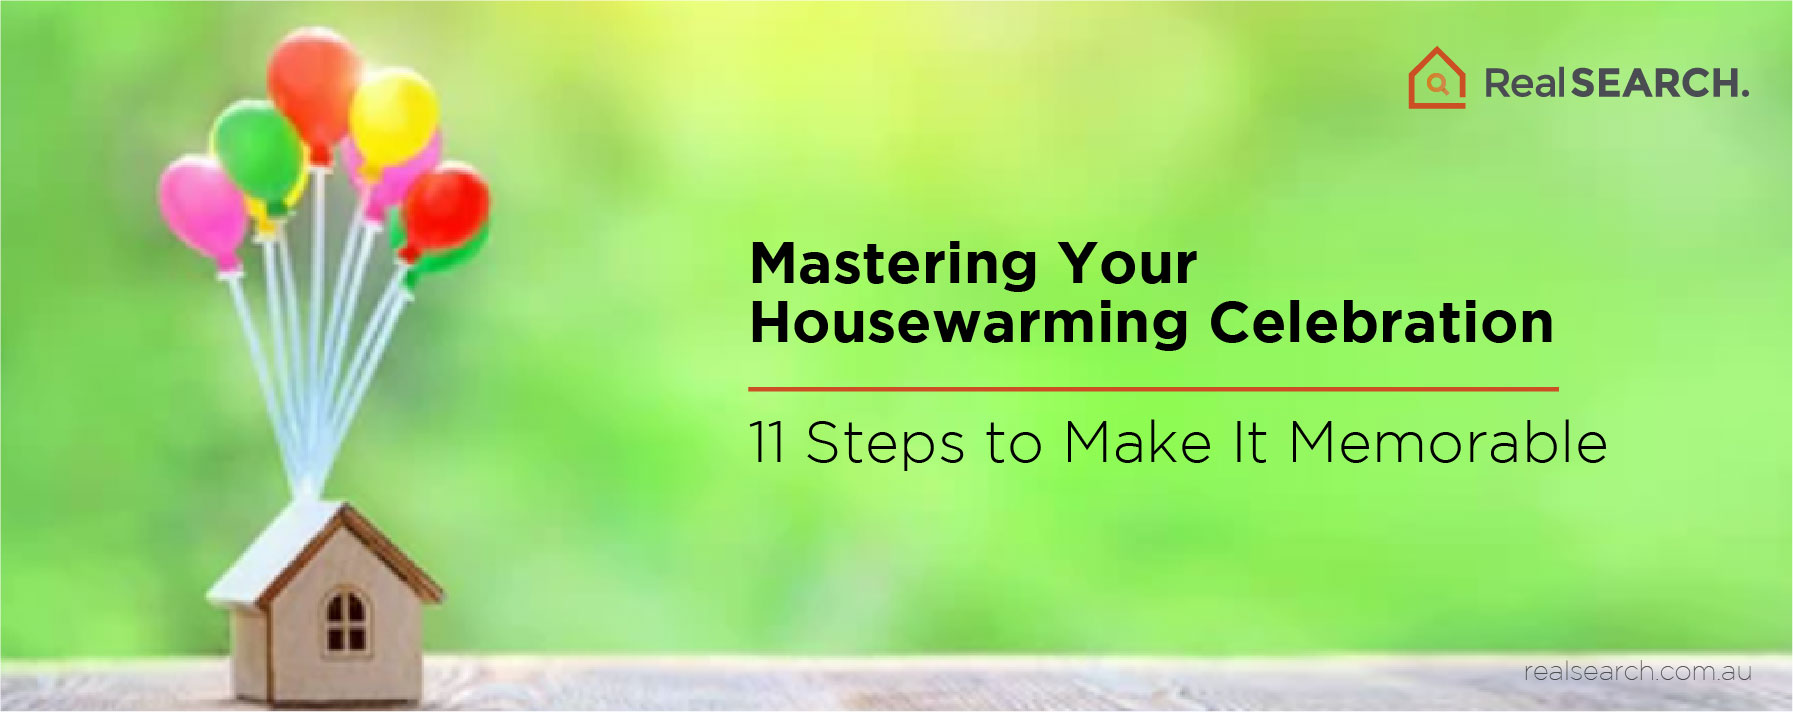 Mastering Your Housewarming Celebration: 11 Steps to Make It Memorable